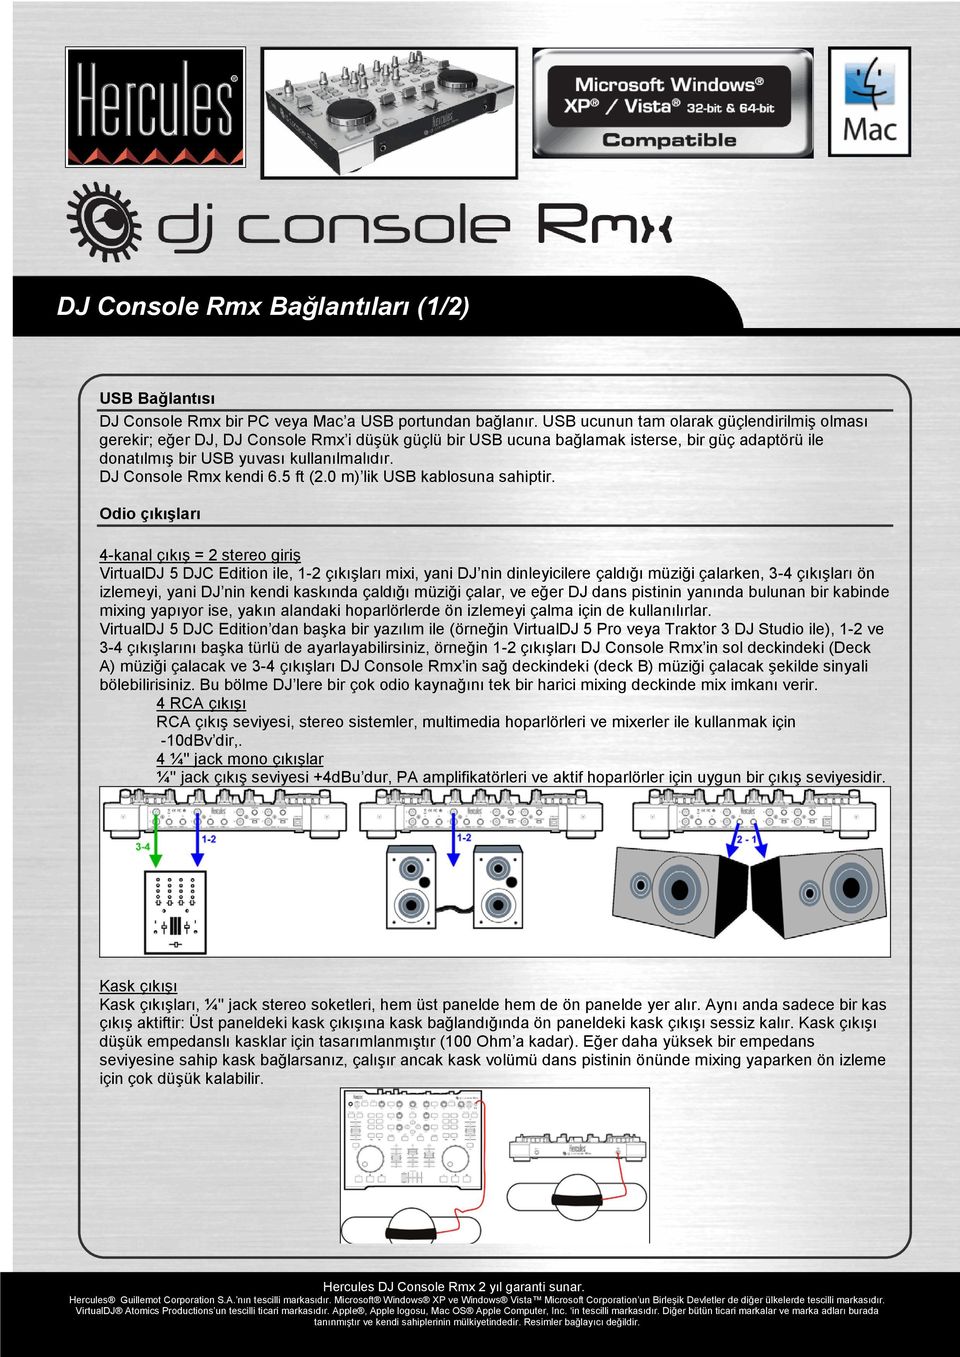 DJ Console Rmx kendi 6.5 ft (2.0 m) lik USB kablosuna sahiptir.